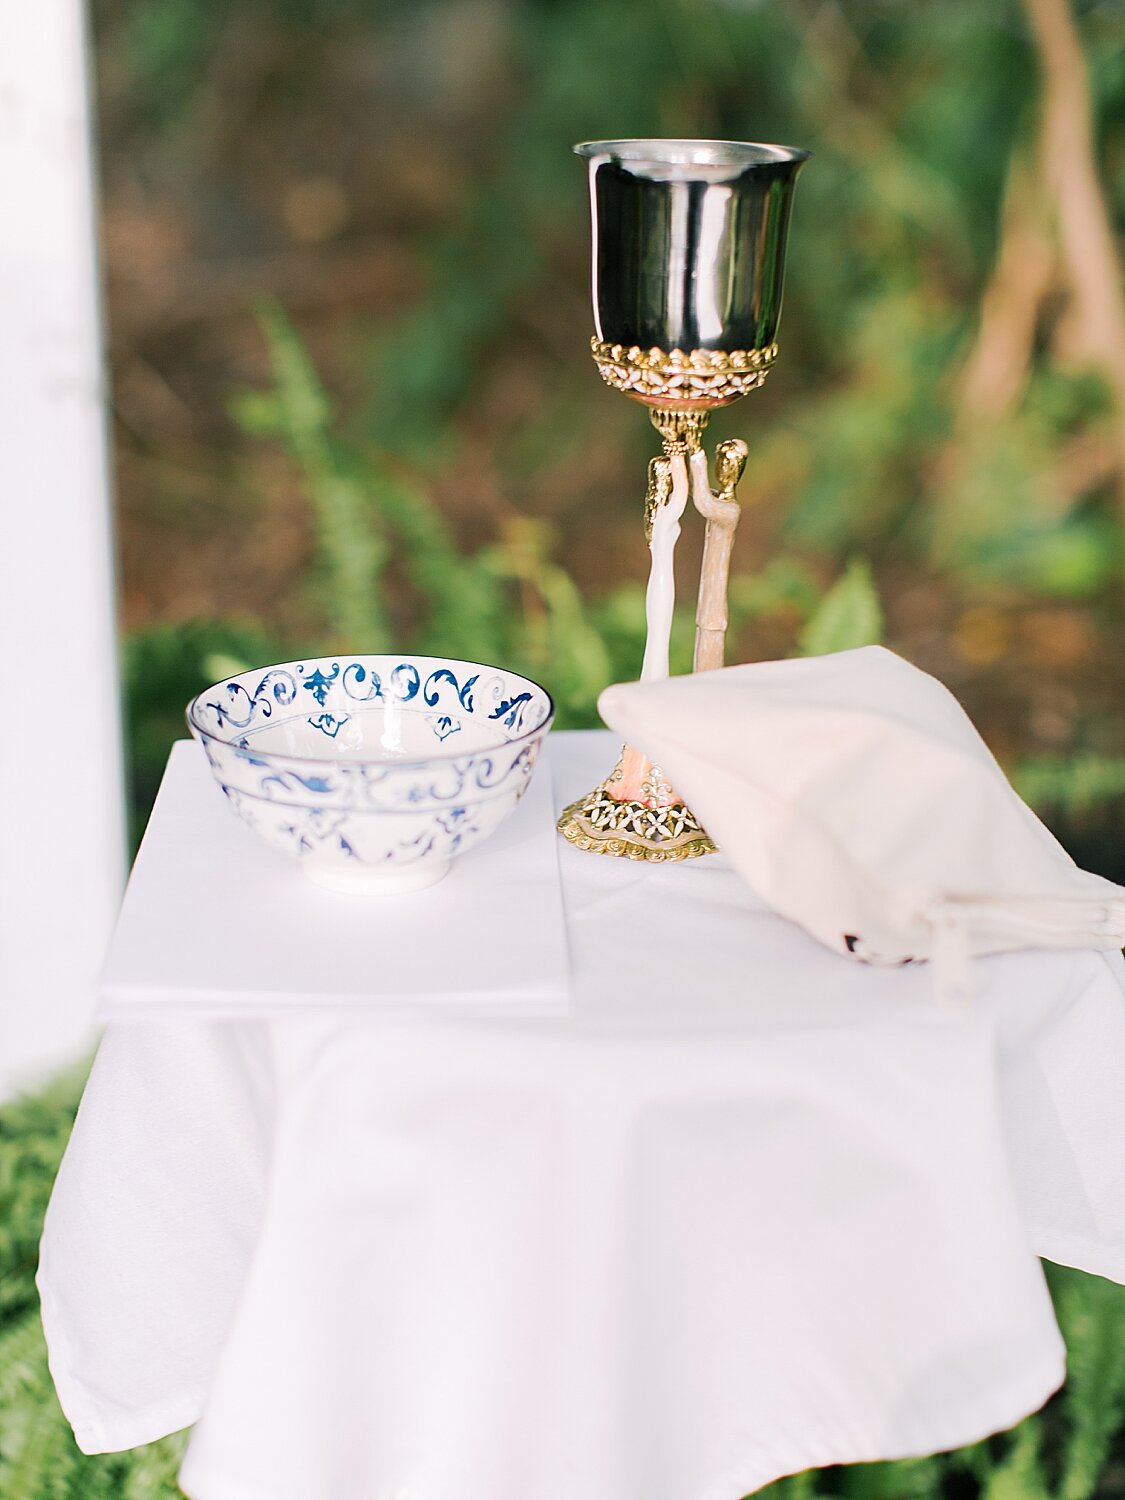 Jewish wedding ceremony details | Stylish Private Home Wedding Inspiration | Asher Gardner Photography